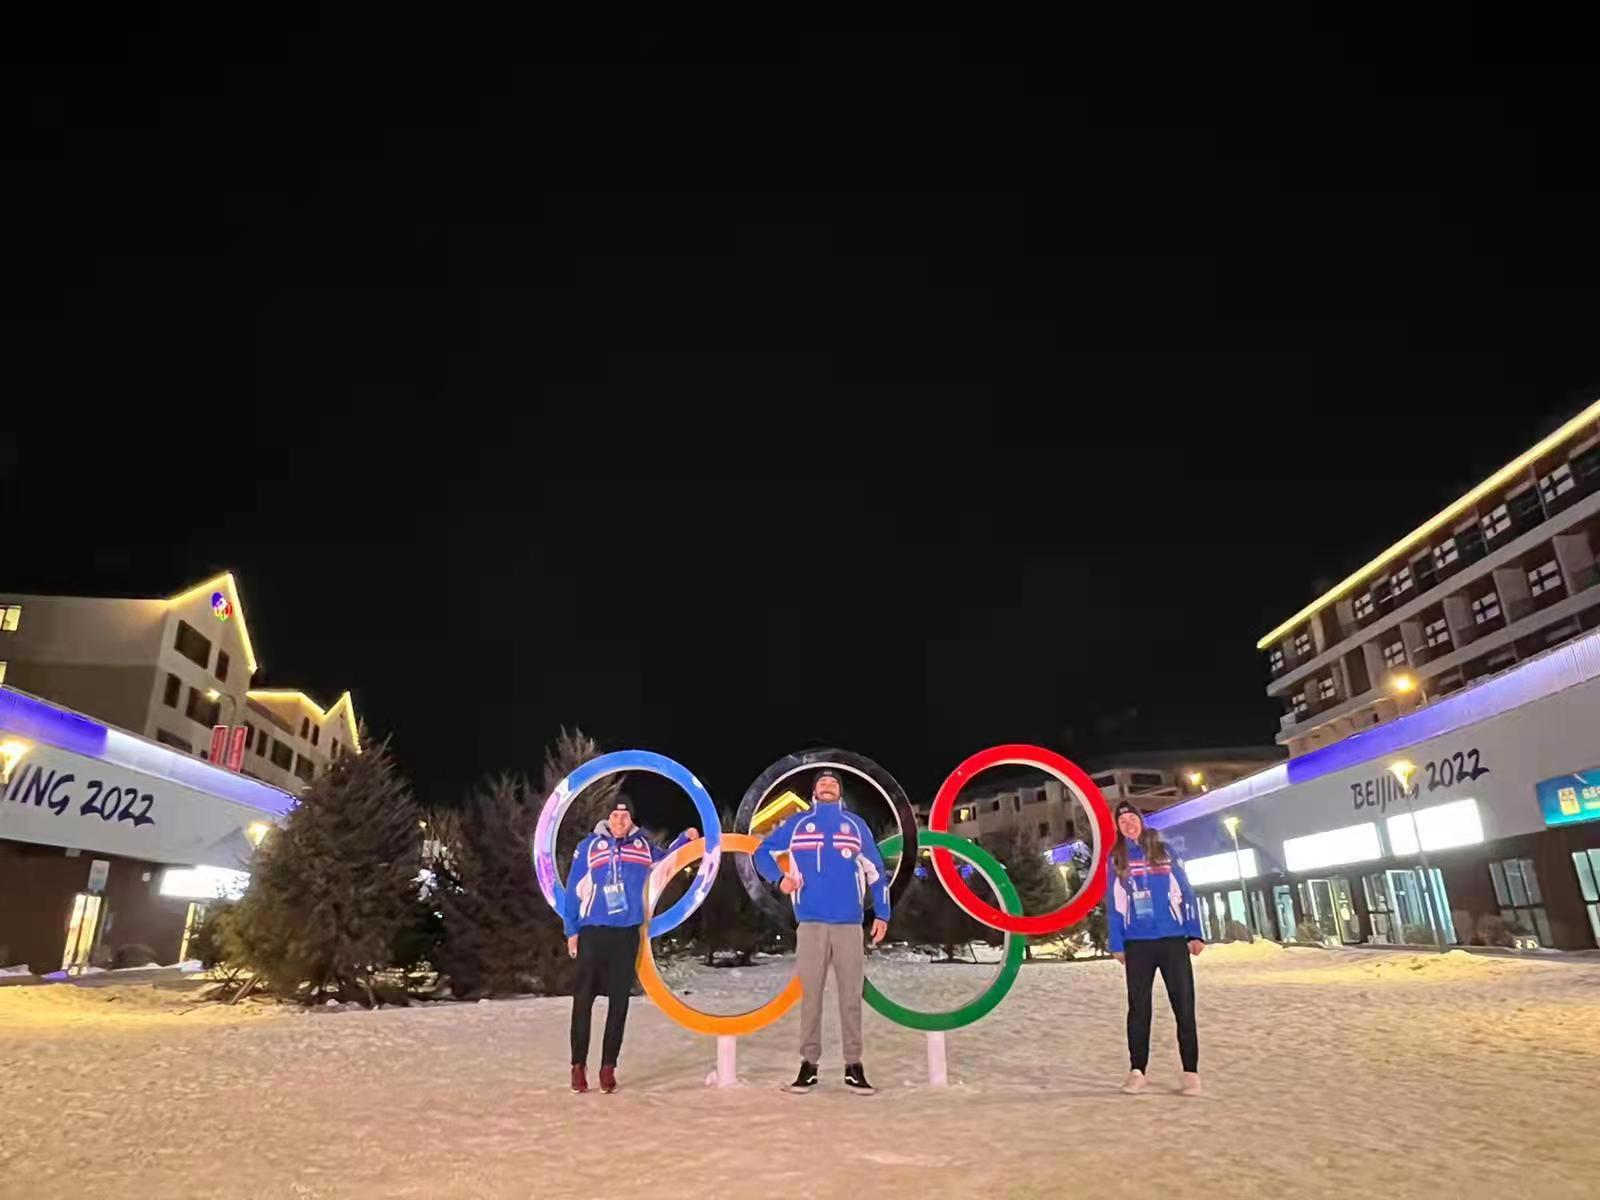 Mark Chanloung in Beijing 2022 Winter Olympics Village